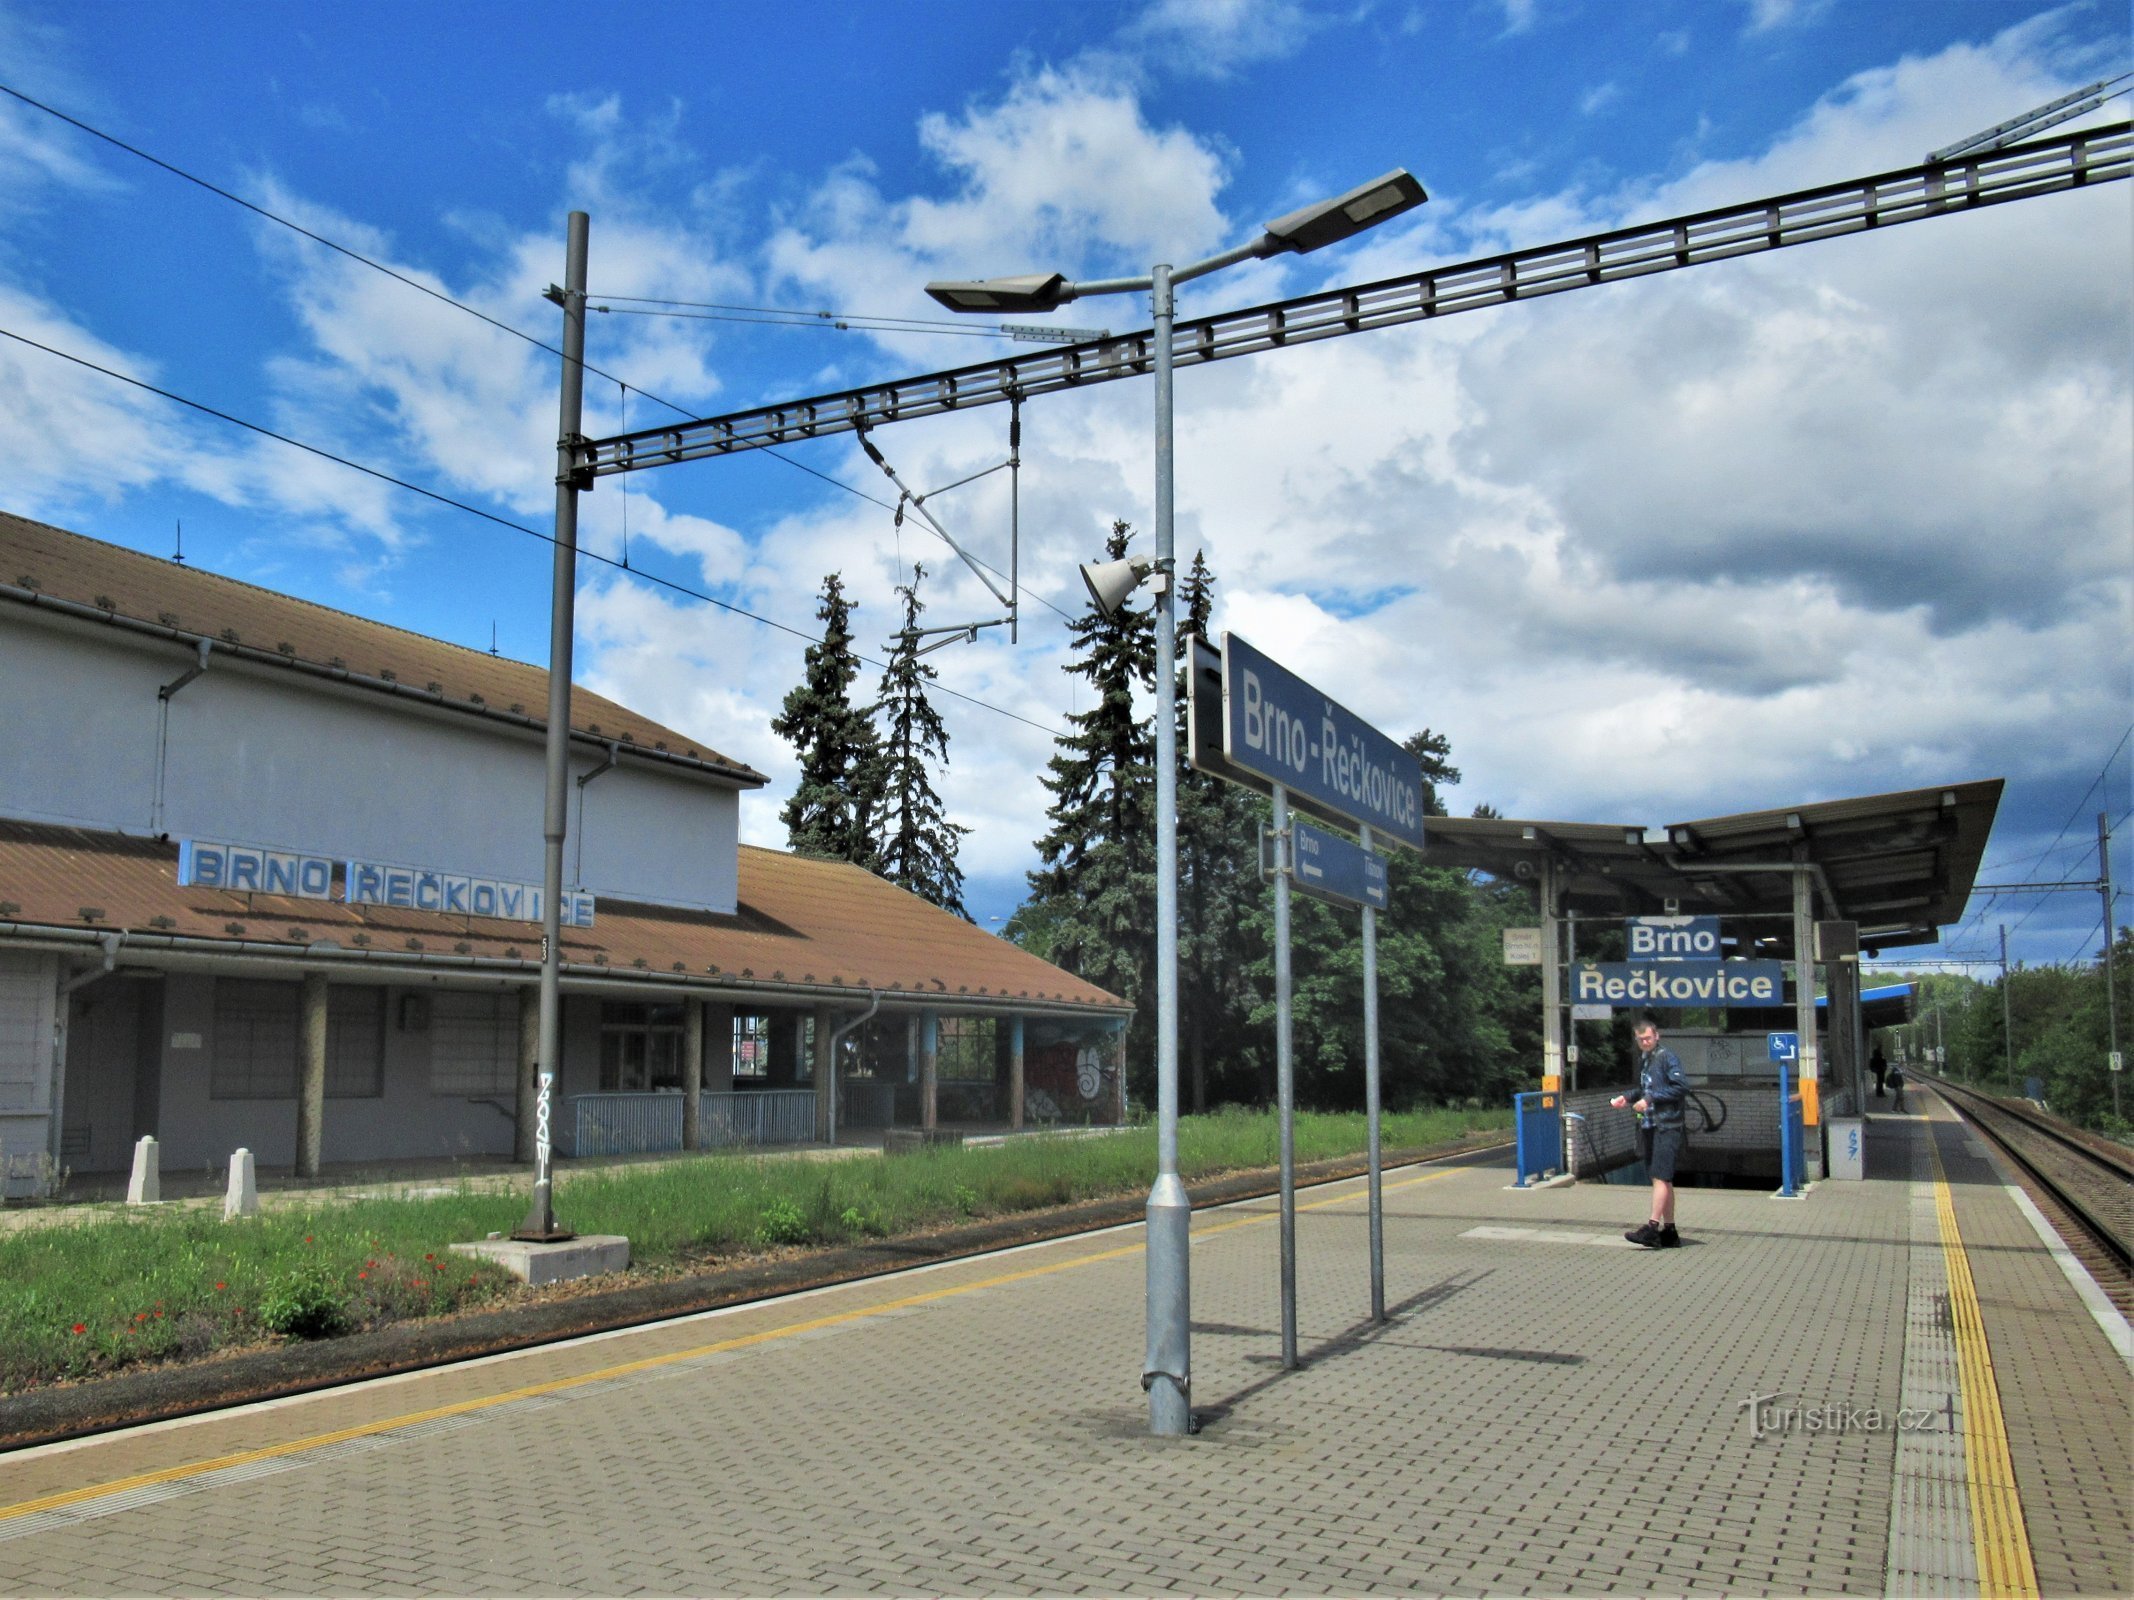 Gare de Brno-Řečkovice